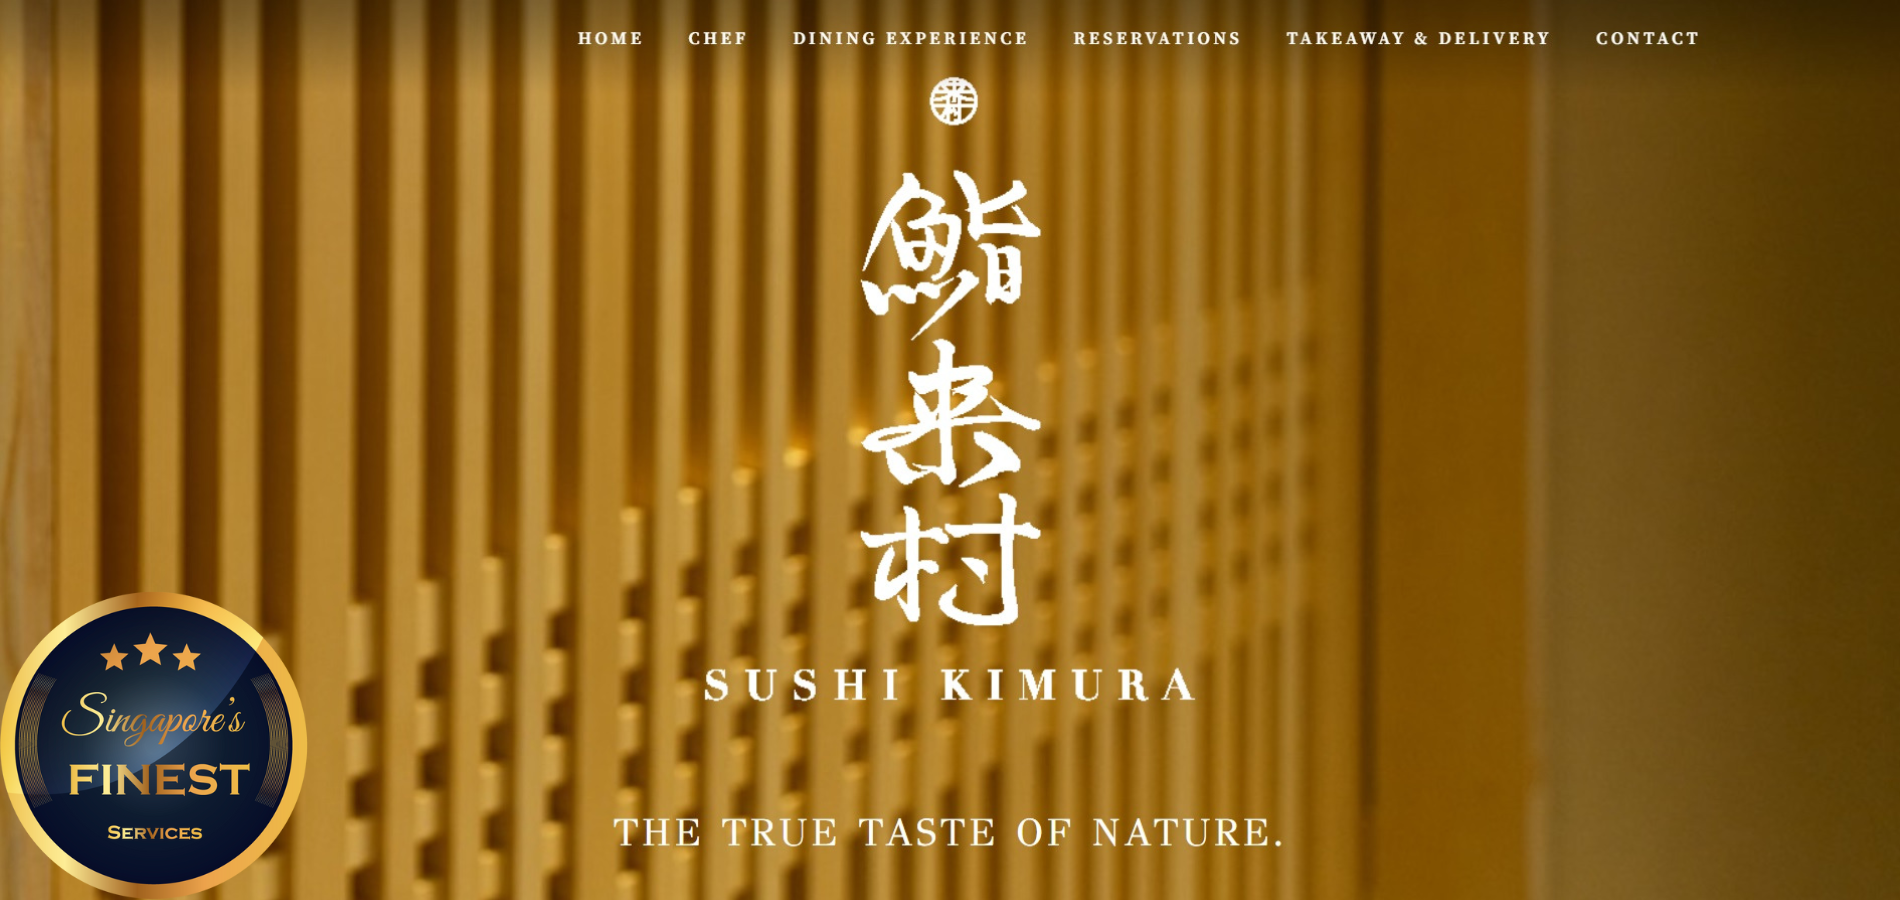 Sushi Kimura - Omakase Restaurants Singapore